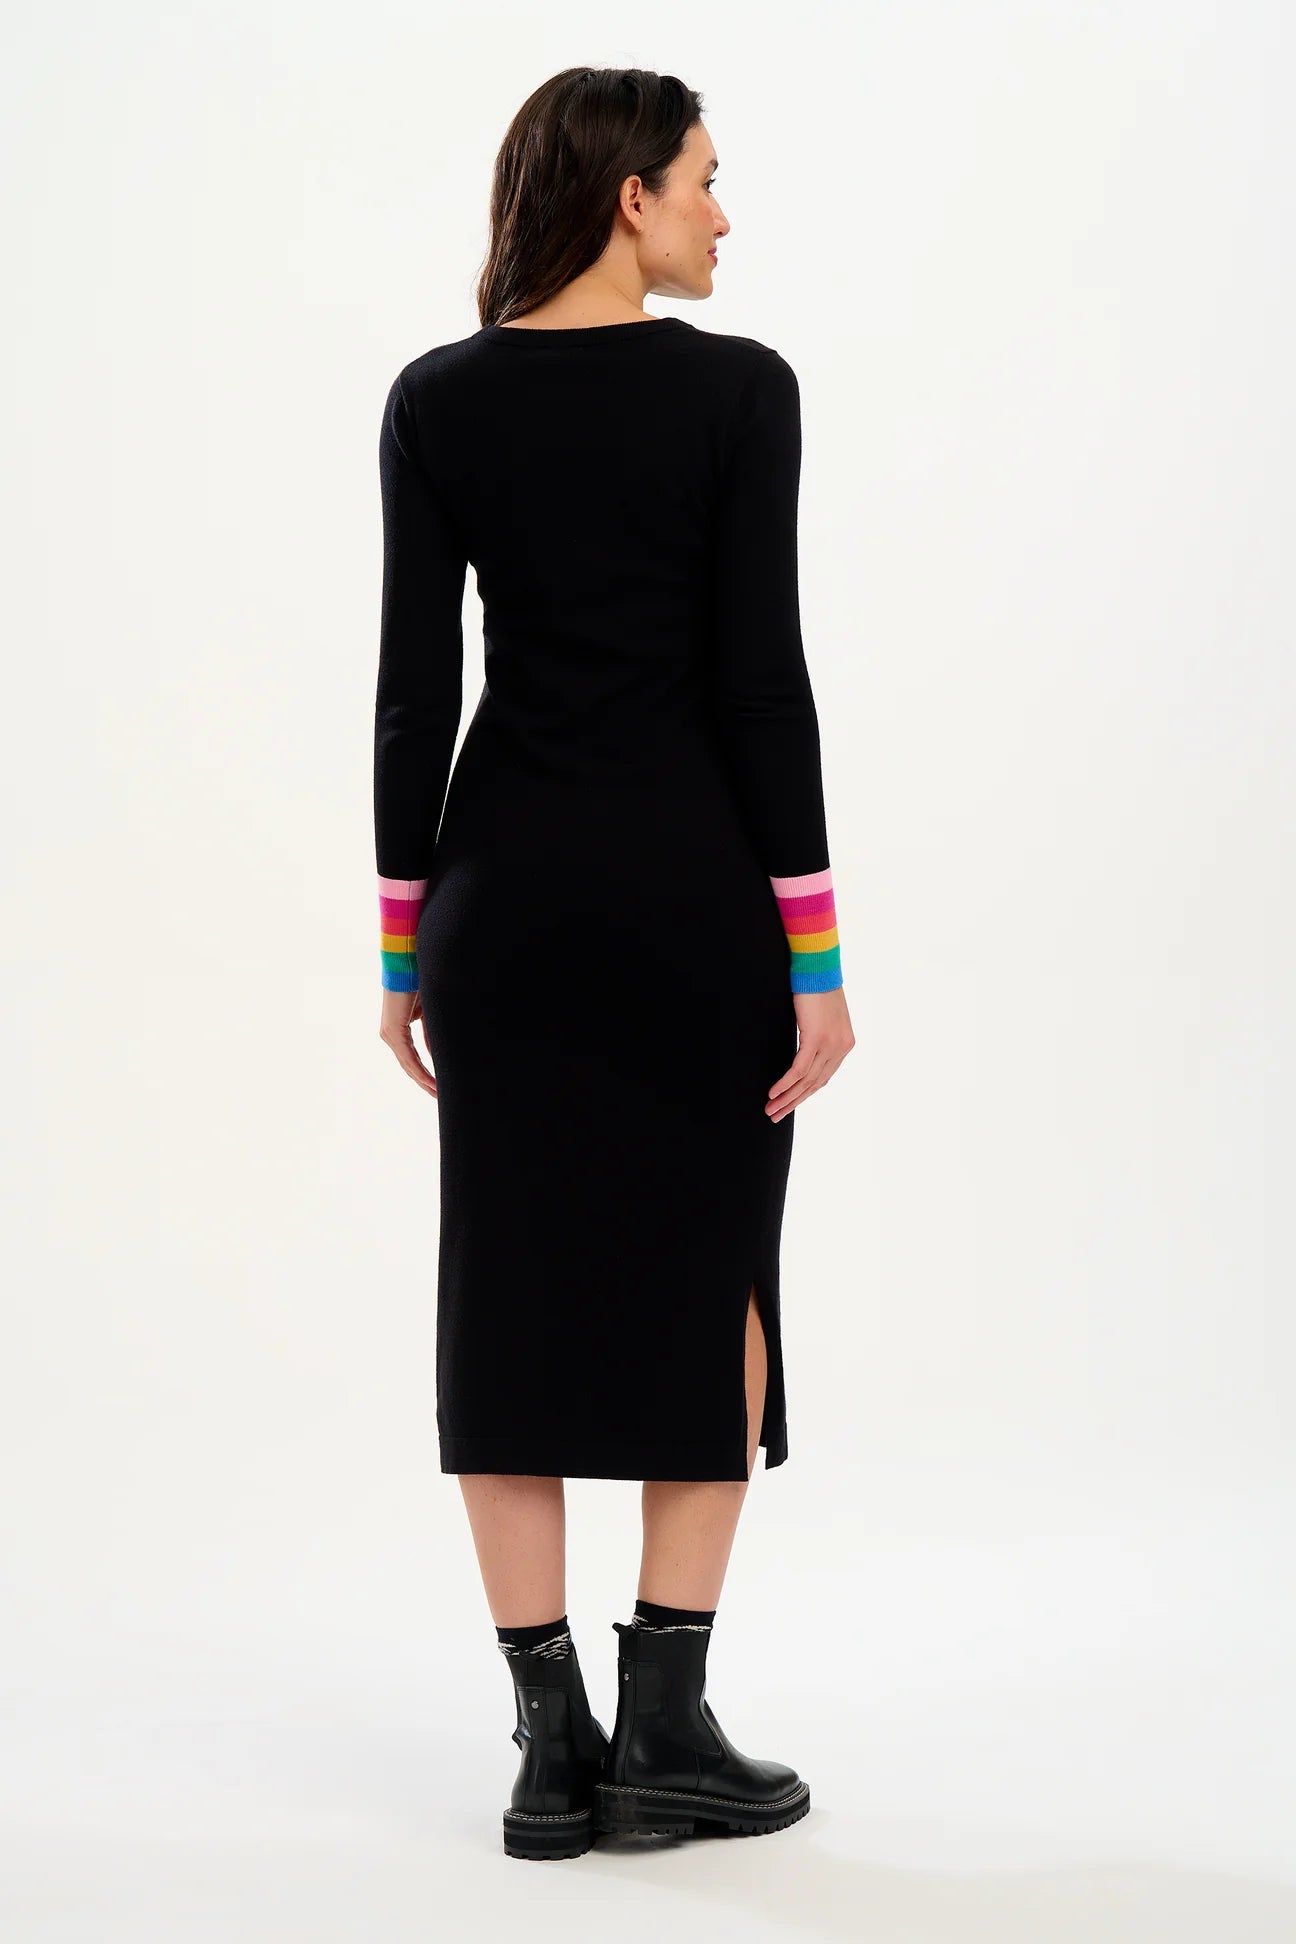 SUGARHILL BRIGHTON-Liselle Midi Knit Dress - Black, Rainbow Stripe Cuff